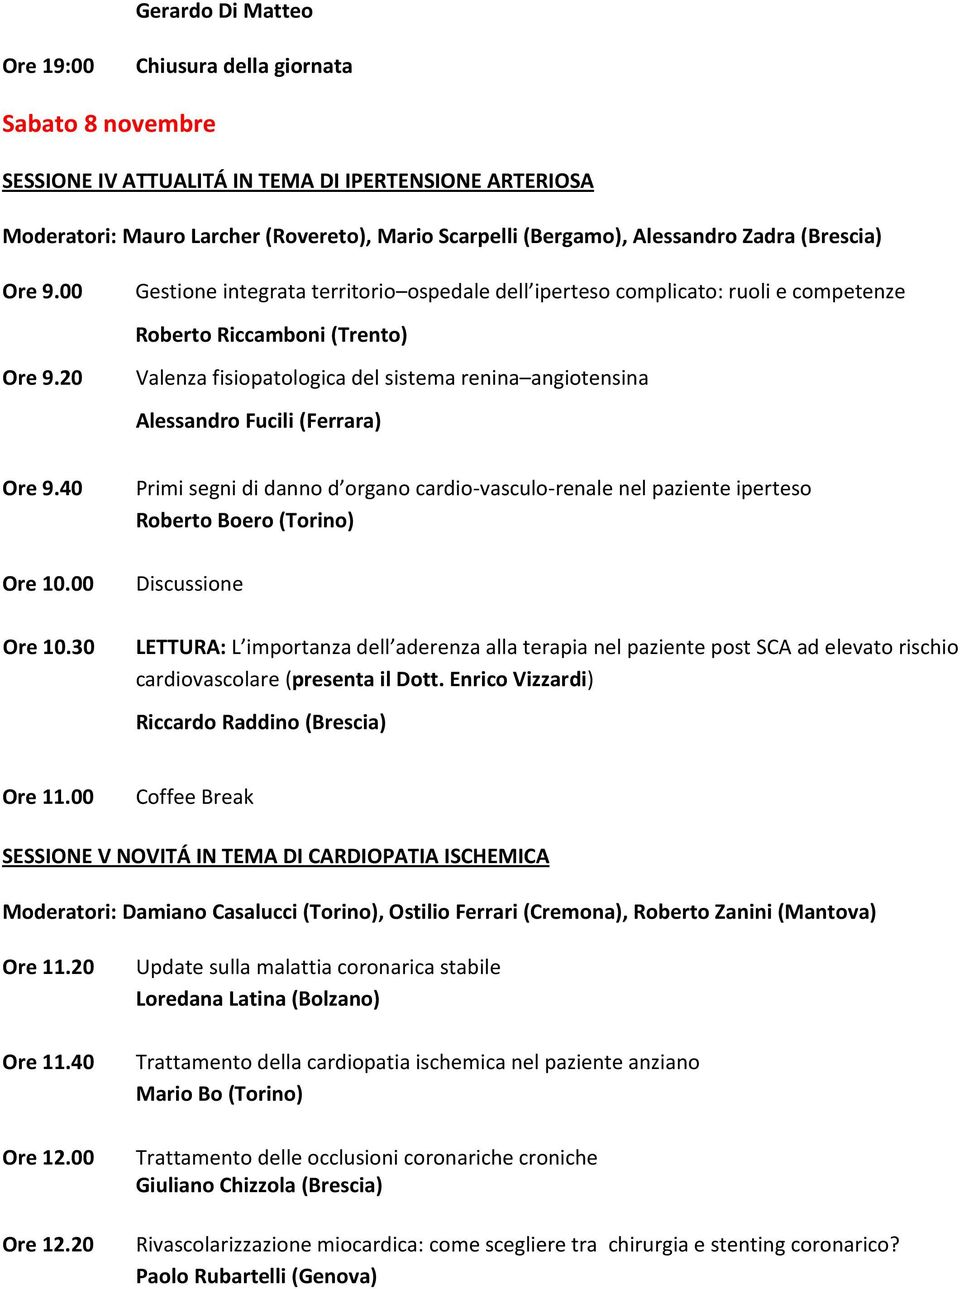 20 Valenza fisiopatologica del sistema renina angiotensina Alessandro Fucili (Ferrara) Ore 9.40 Ore 10.00 Ore 10.